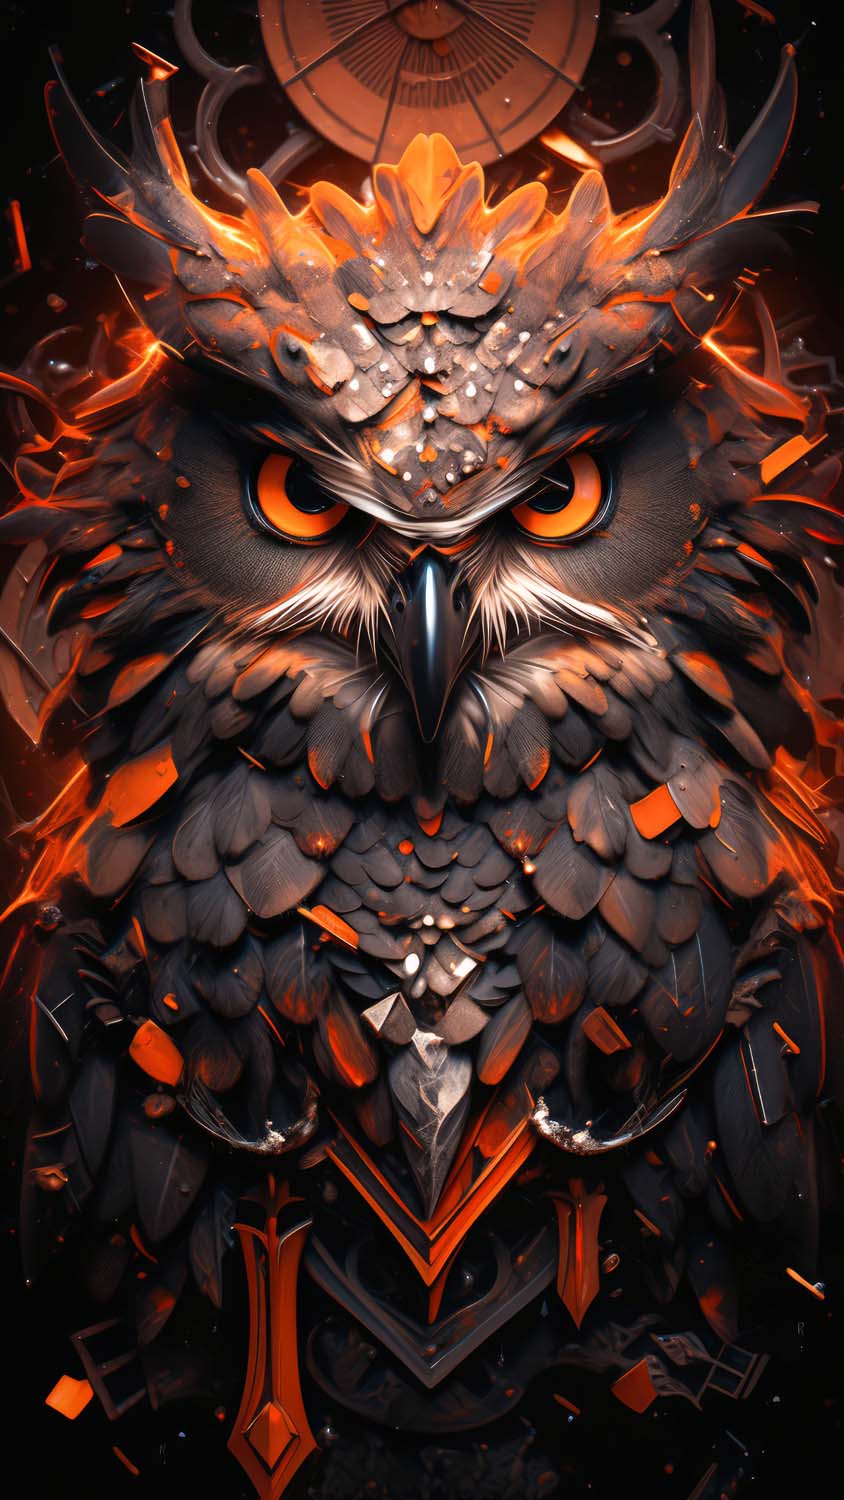 The Owl iPhone Wallpaper 4K